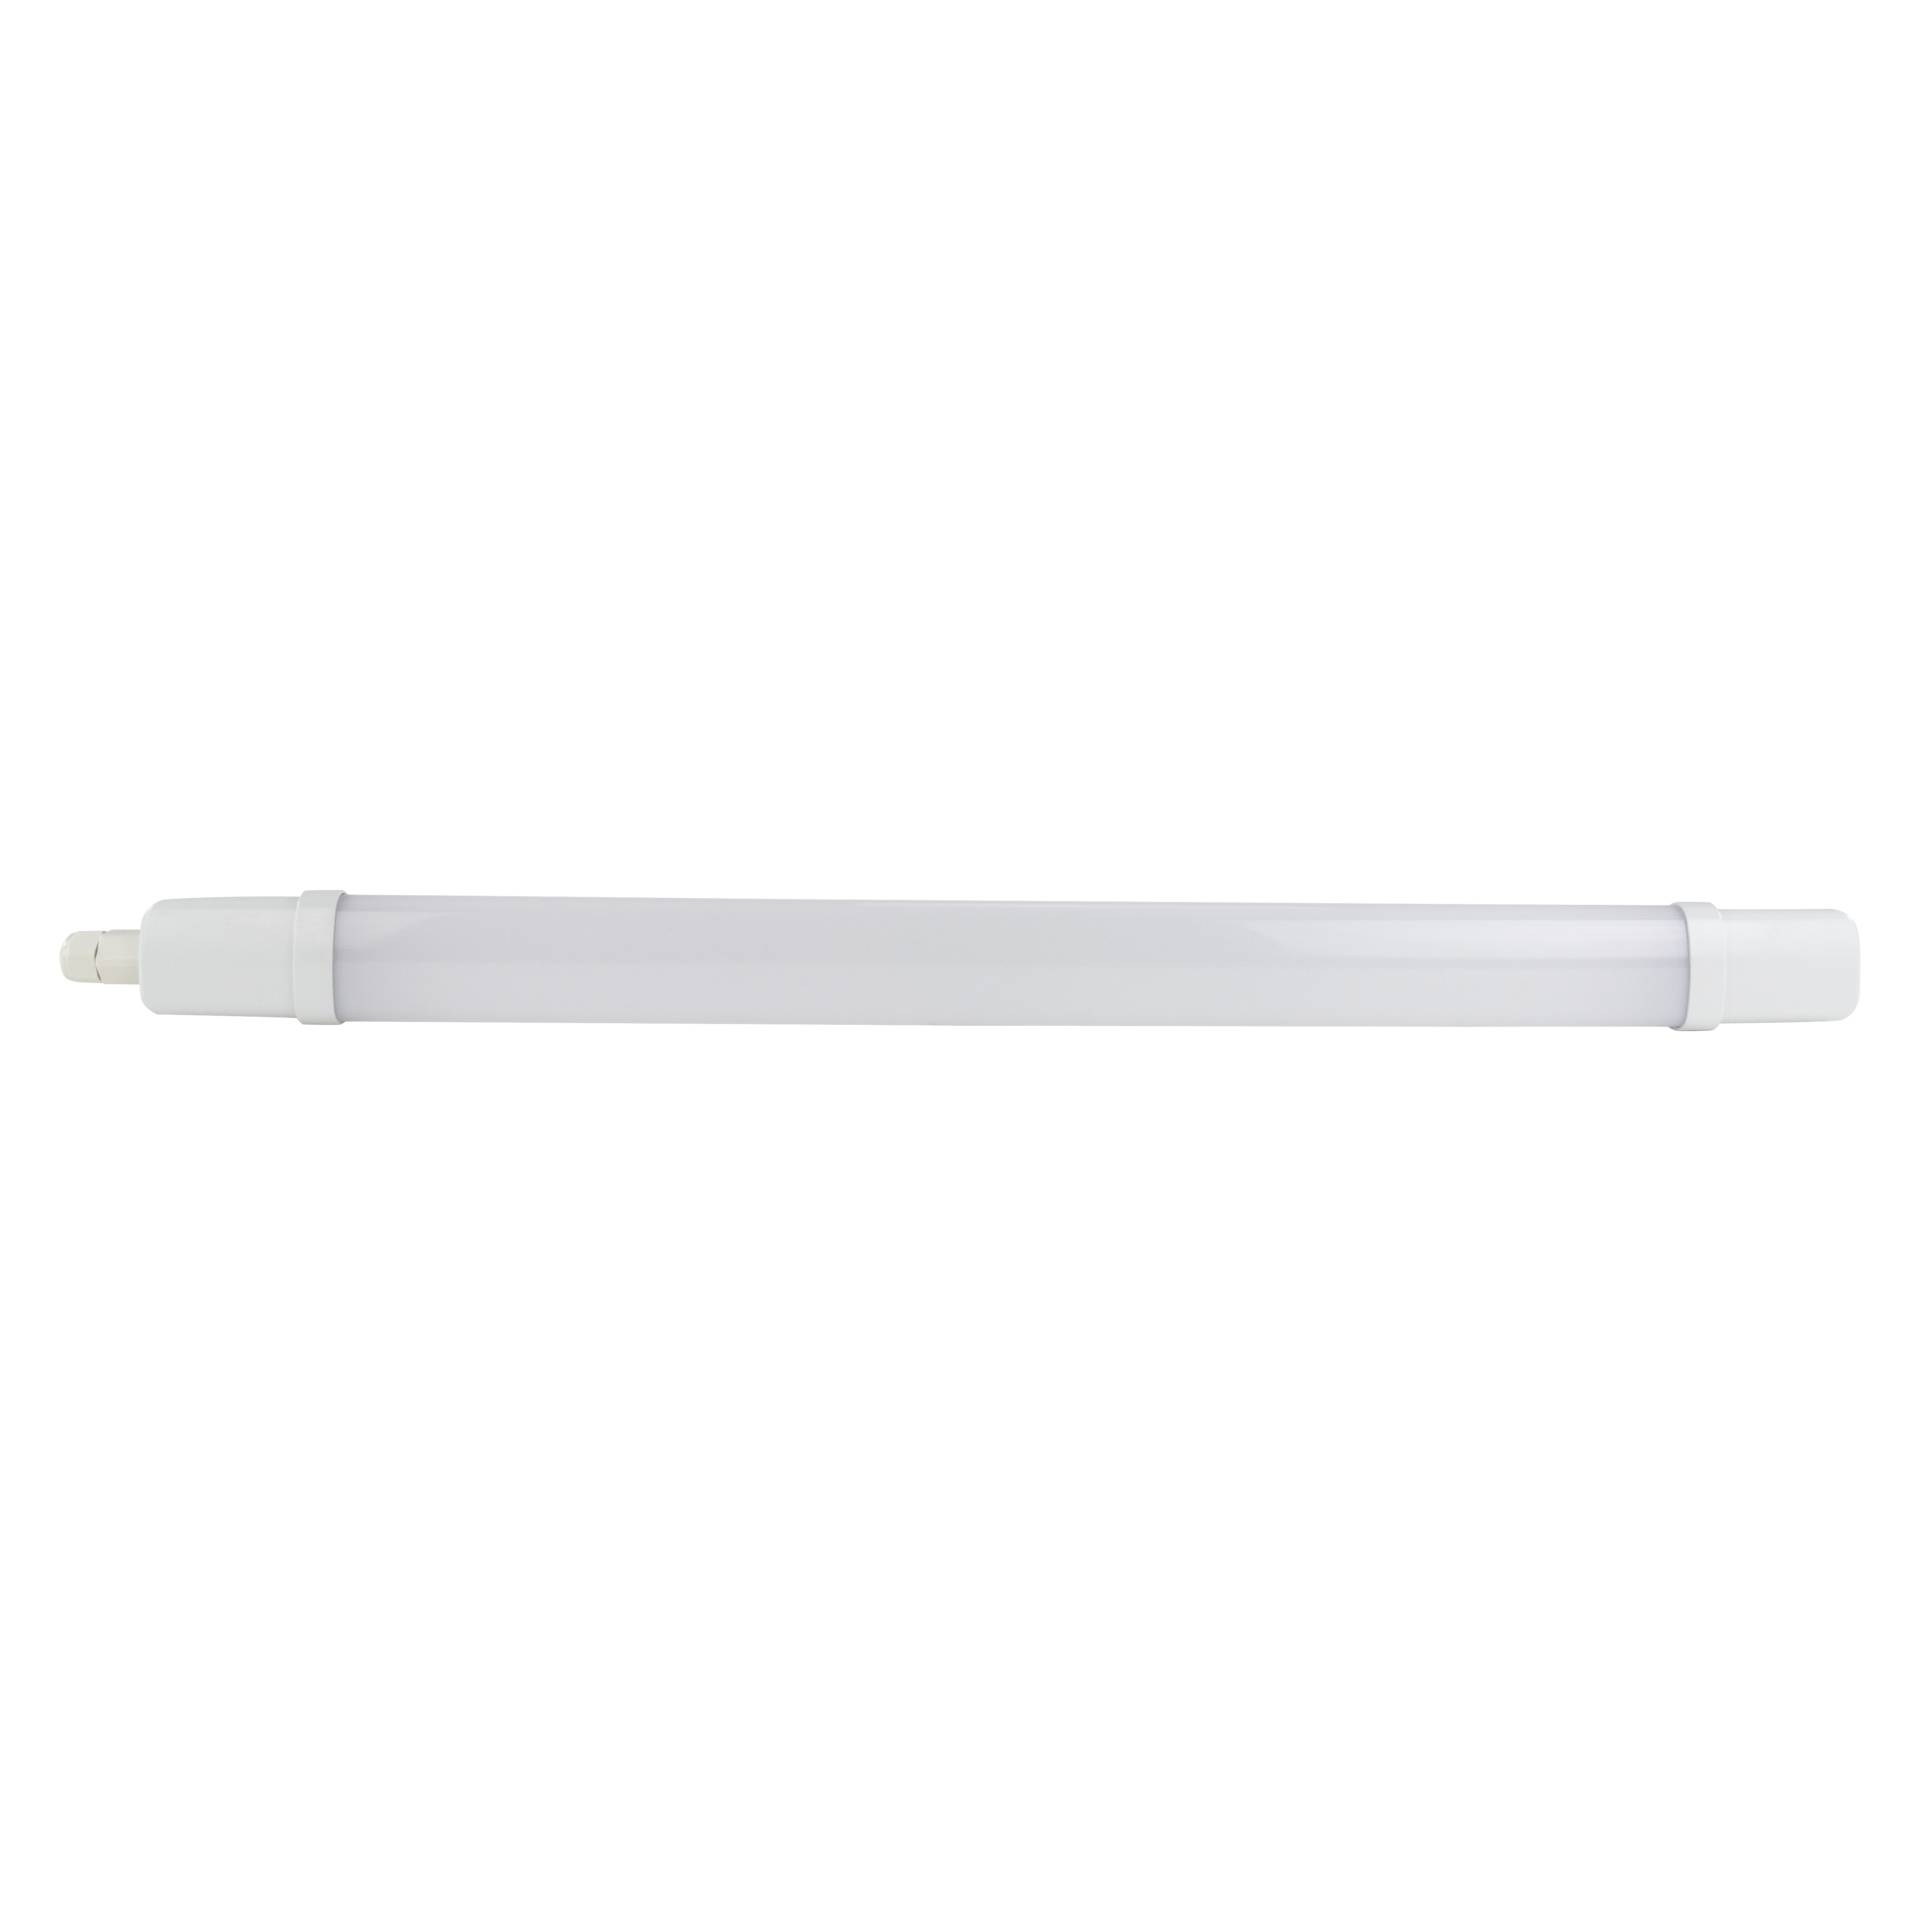 REV LED Moisture Proof Lamp SuperSlim 18W white